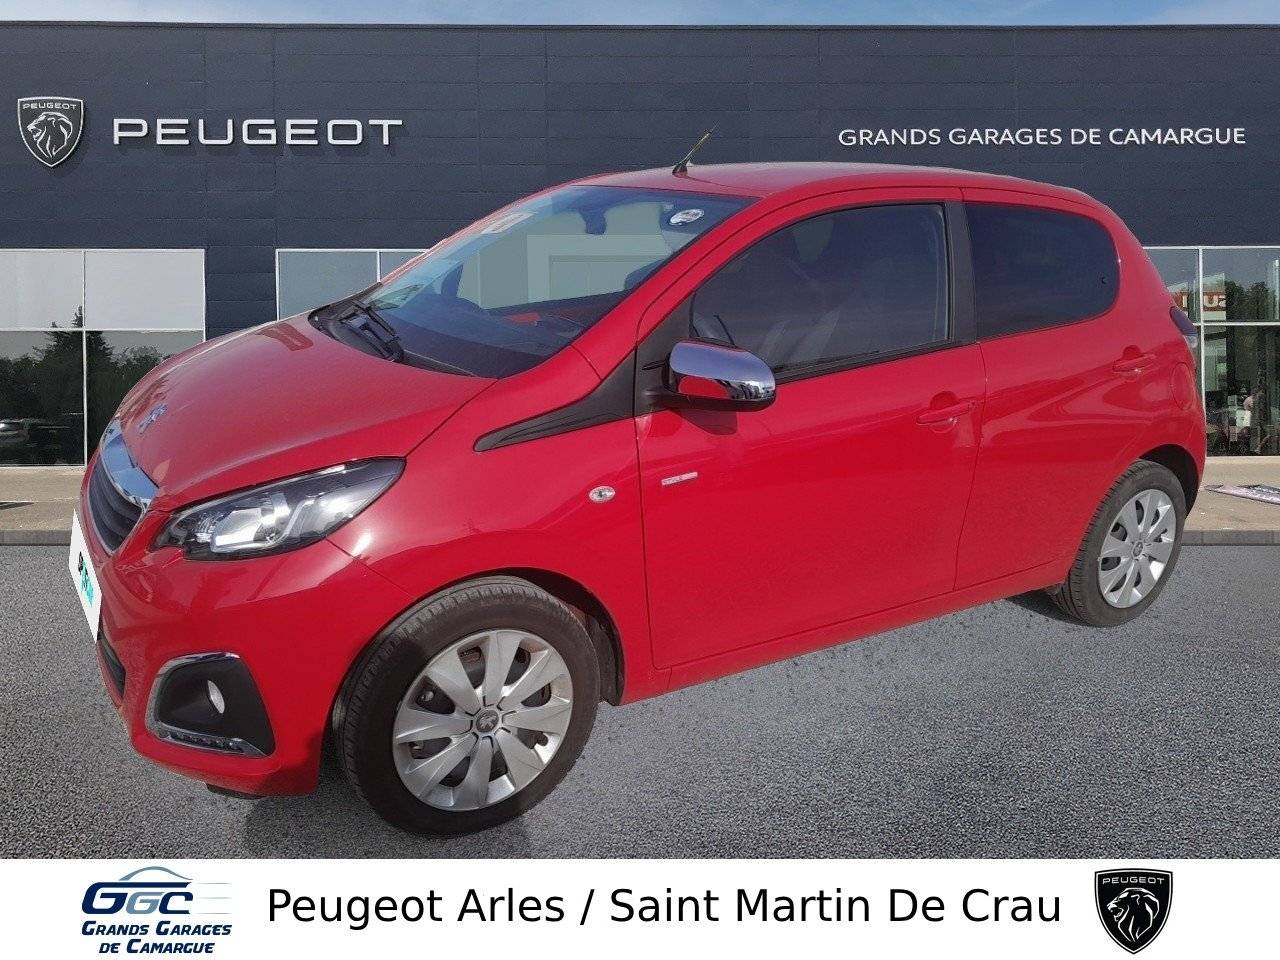 PEUGEOT 108 | 108 VTi 72ch S&S BVM5 occasion - Peugeot Arles